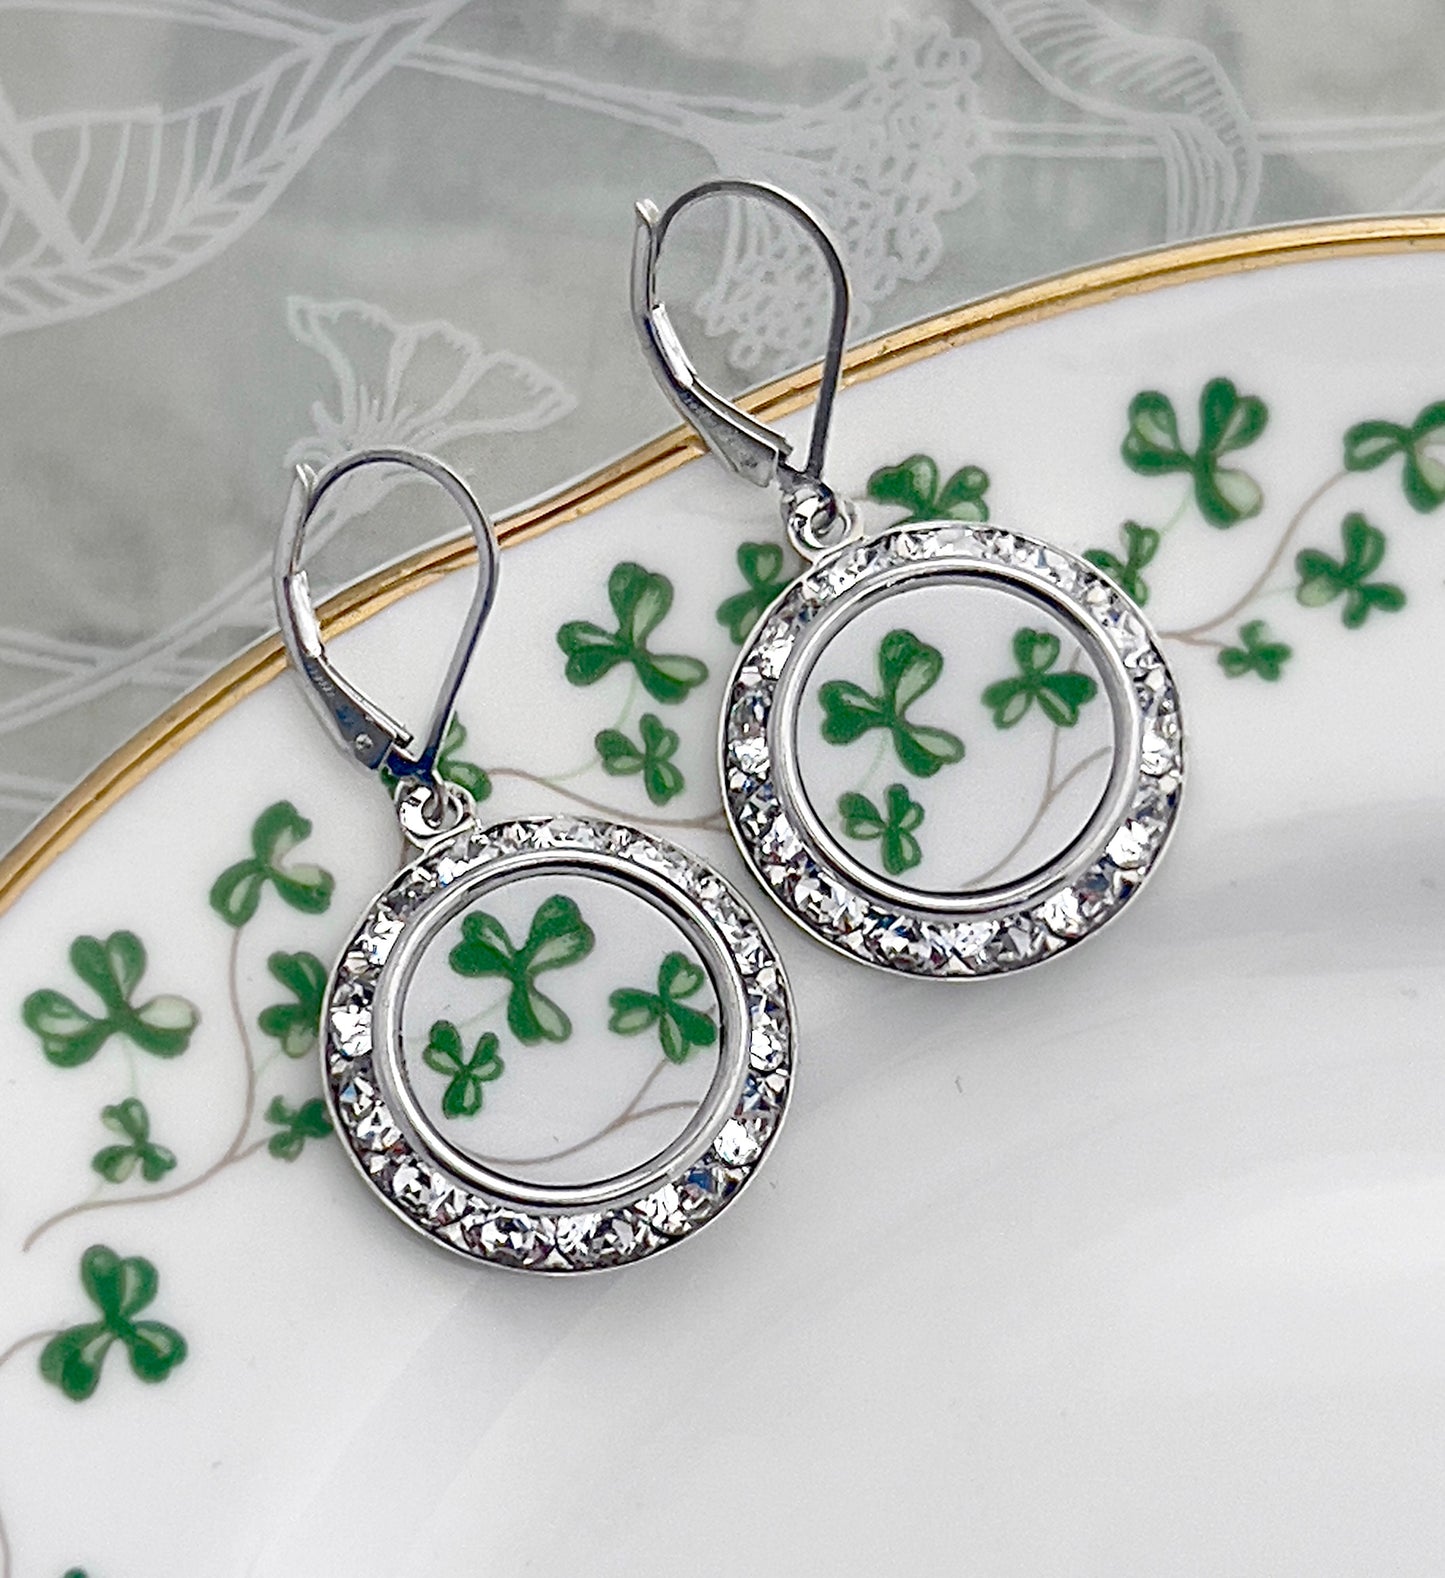 Irish Royal Tara China Crystal Earrings, Shamrock Broken China Jewelry, Celtic Jewelry Gifts for Women